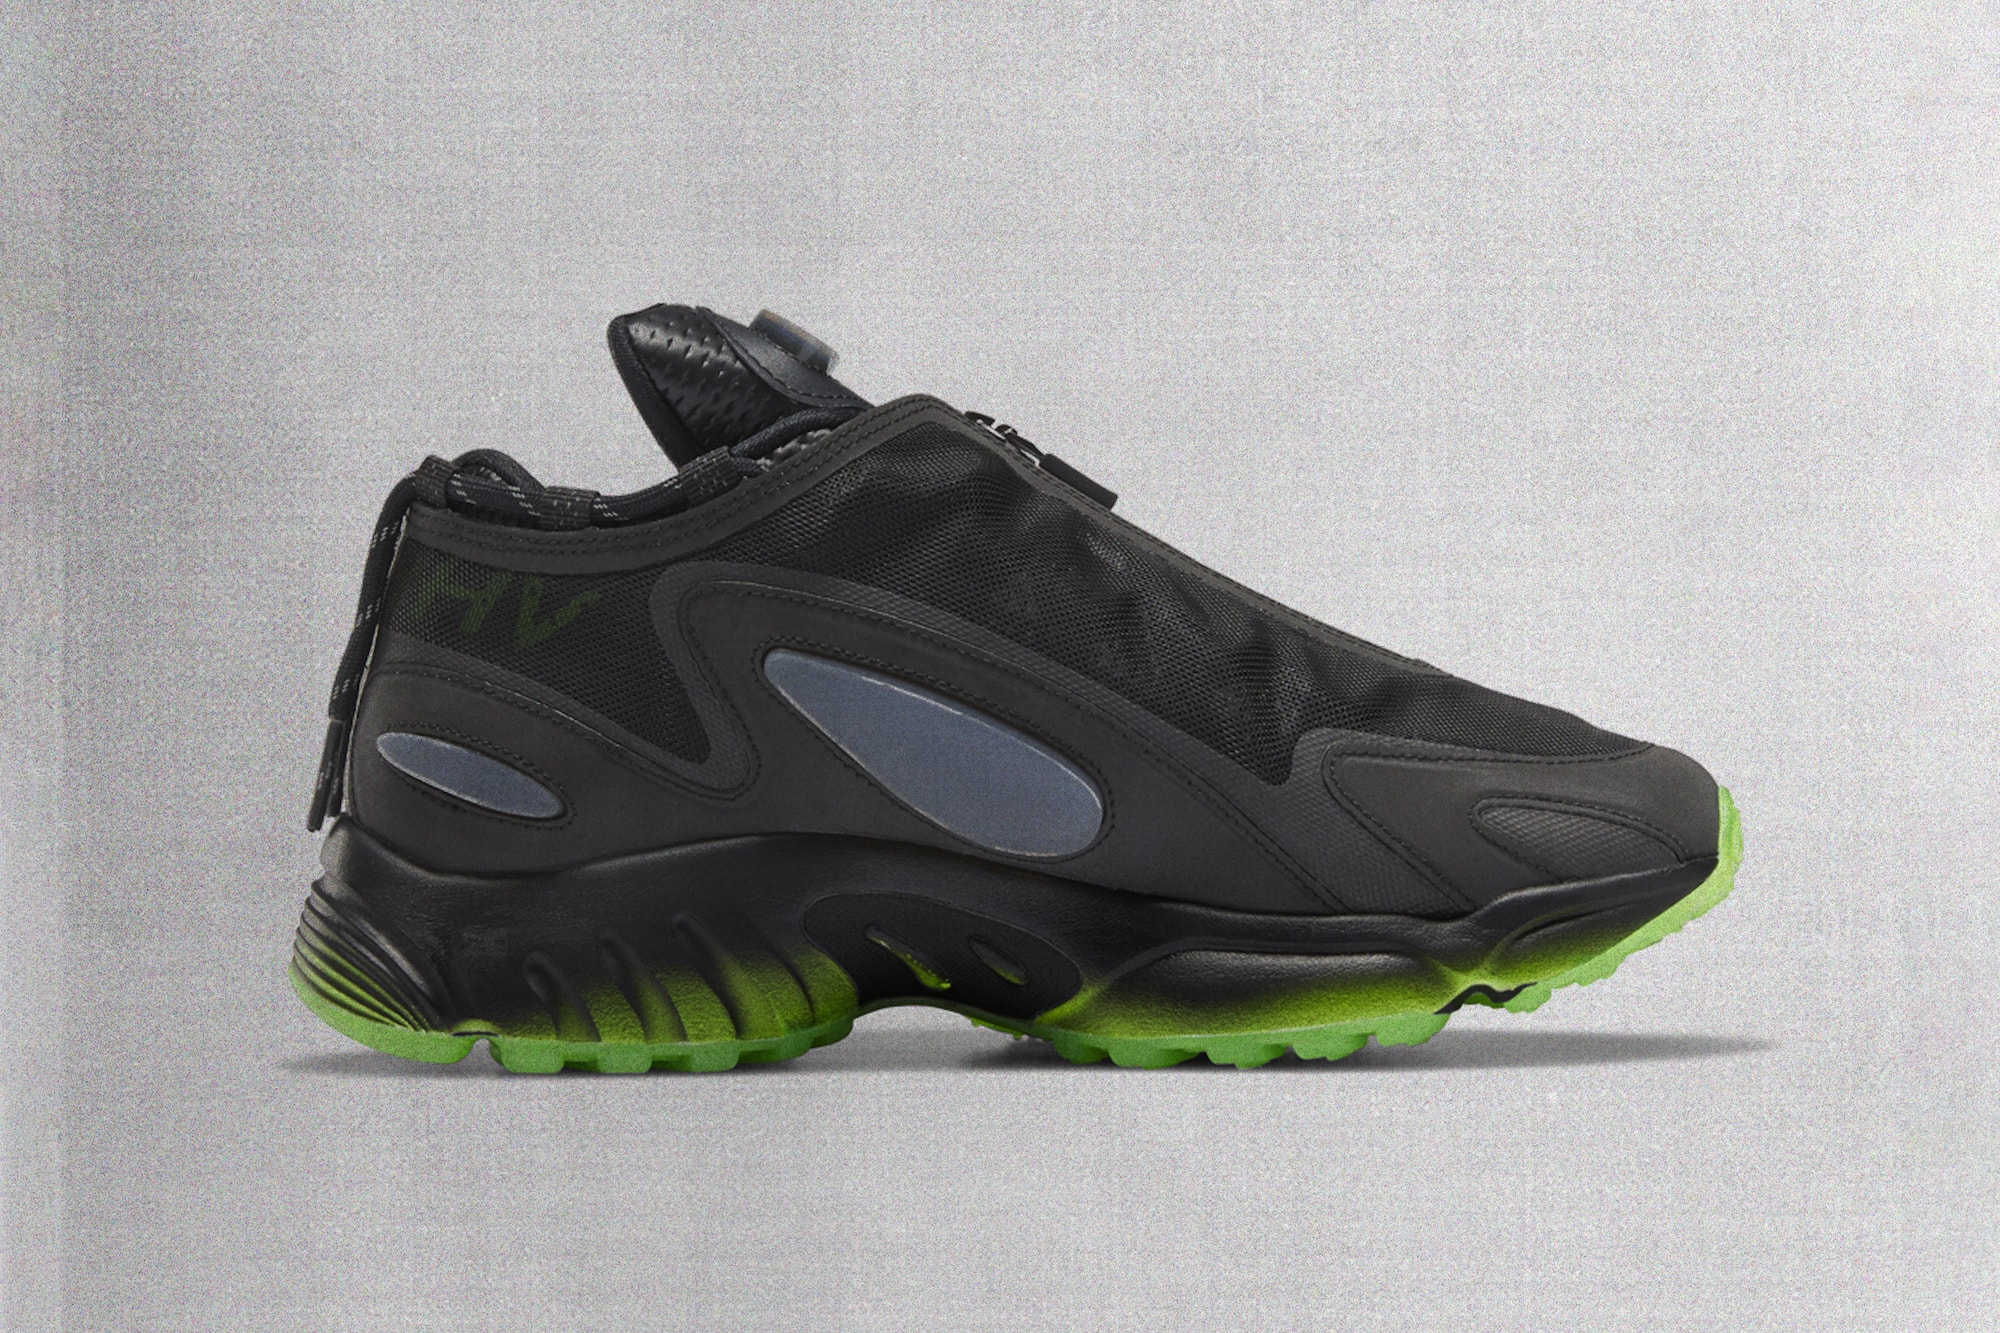 MISBHV x Reebok Daytona DMX 2.0 Release Date HBX Sneaker Trainer Shoe Black Neon Green Futuristic Drop Collaboration